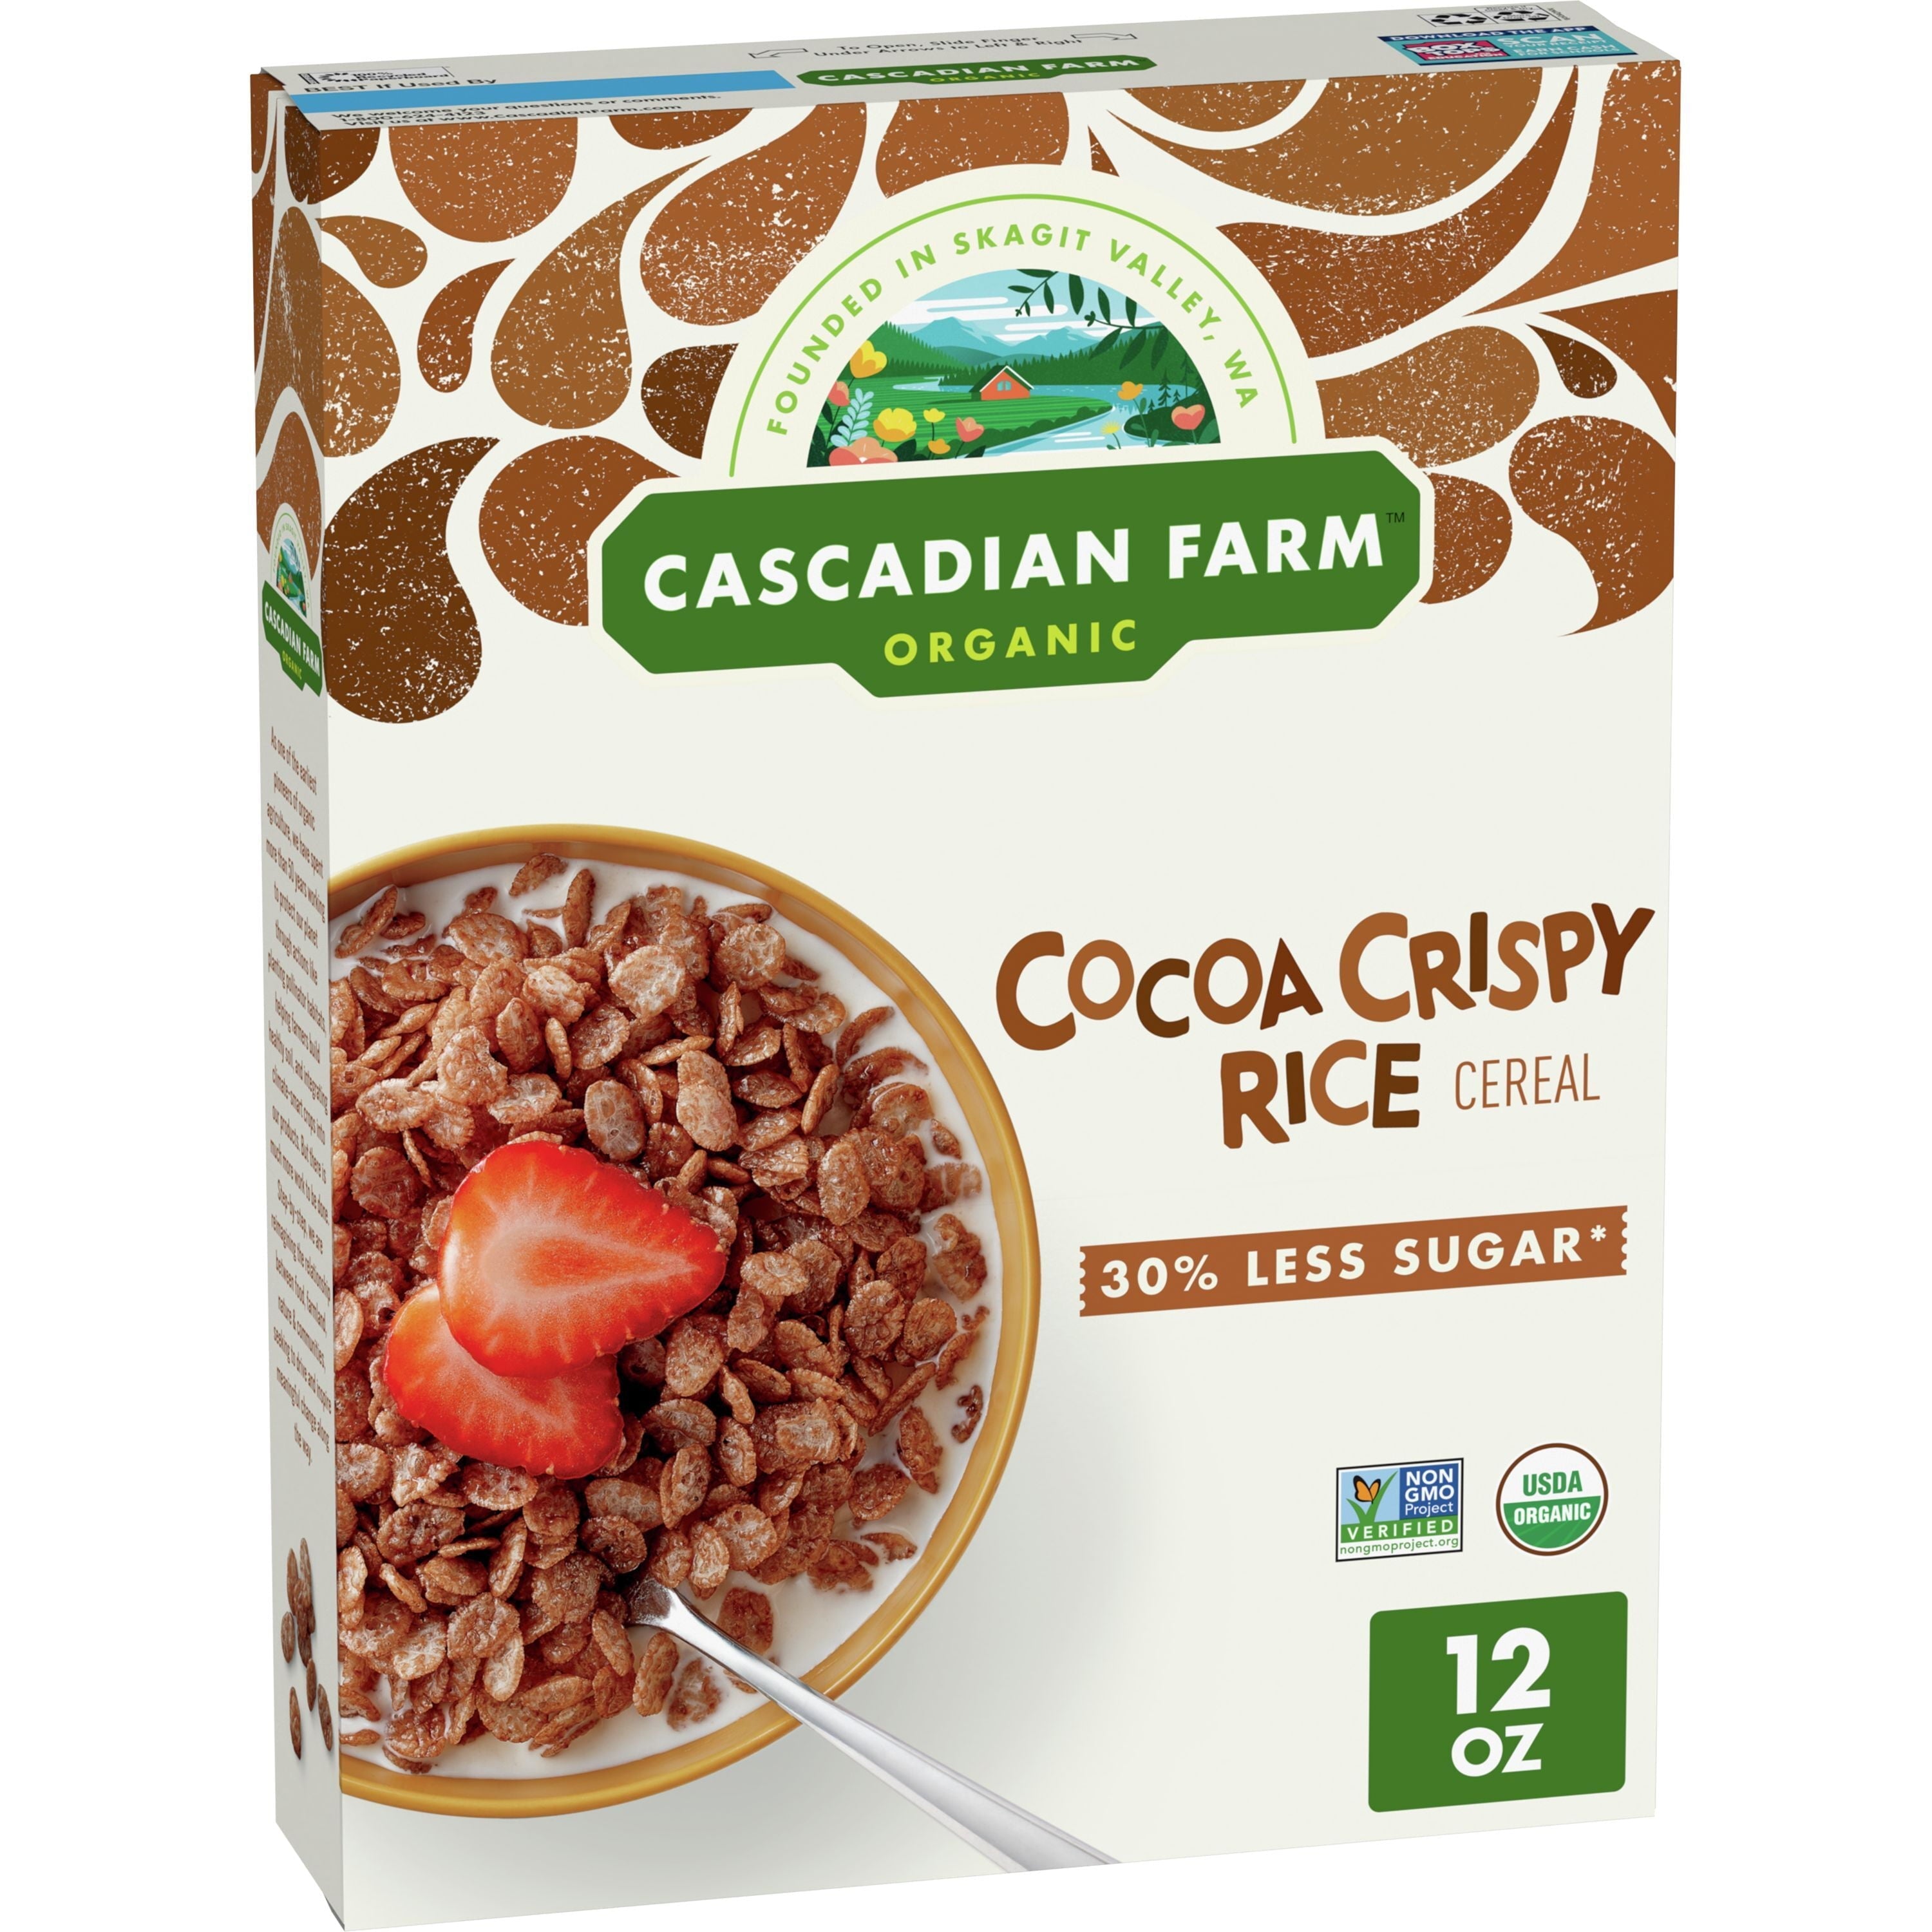 Cascadian Farm Organic Cocoa Crispy Rice Cereal 12 Oz Box